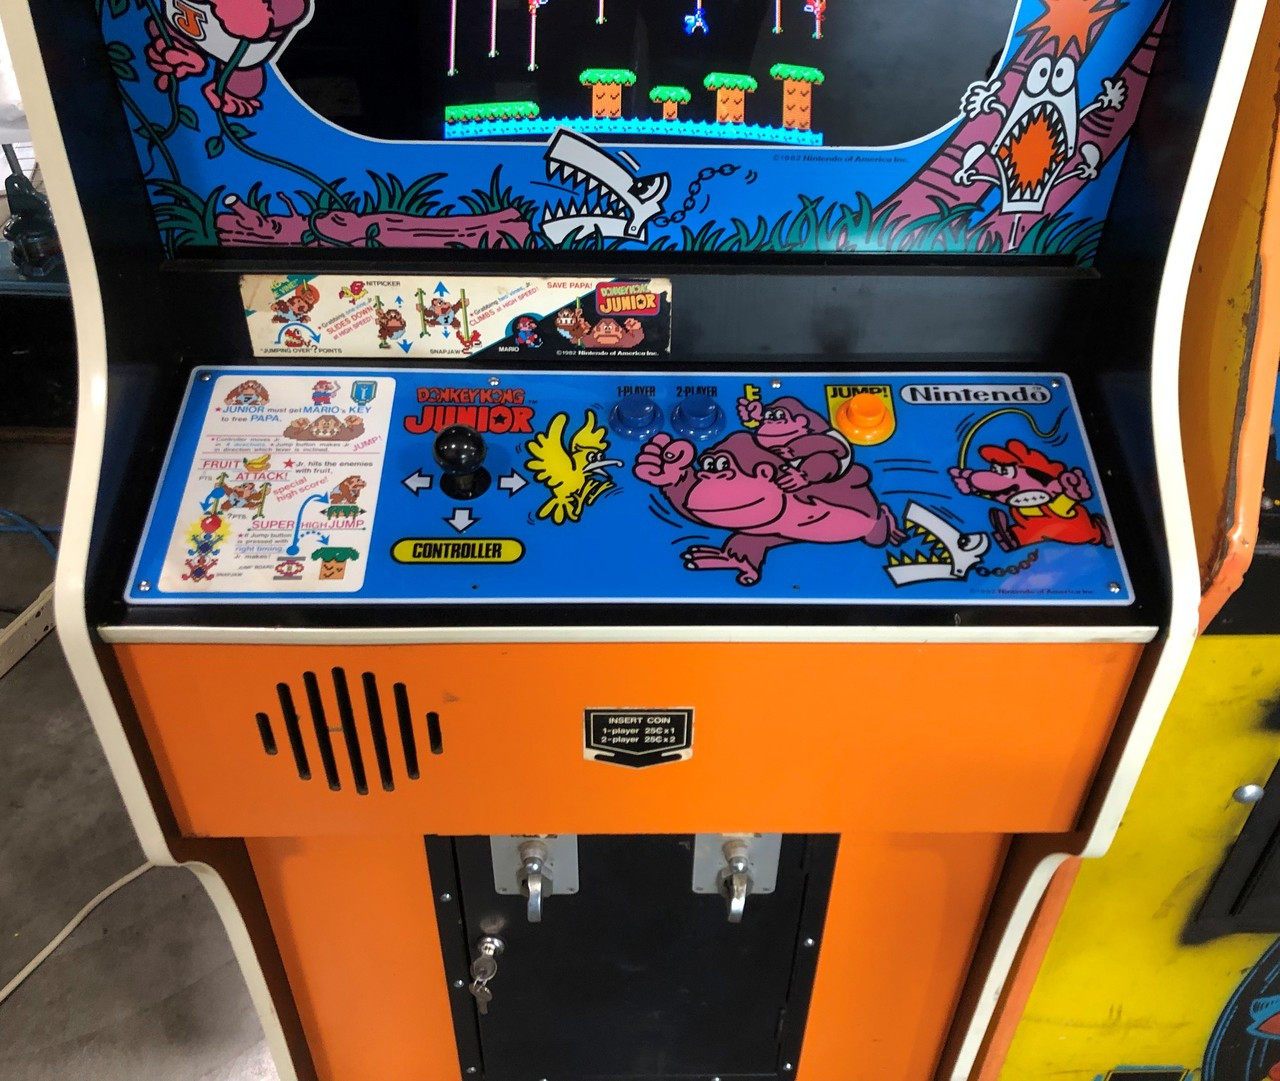 donkey kong jr arcade game